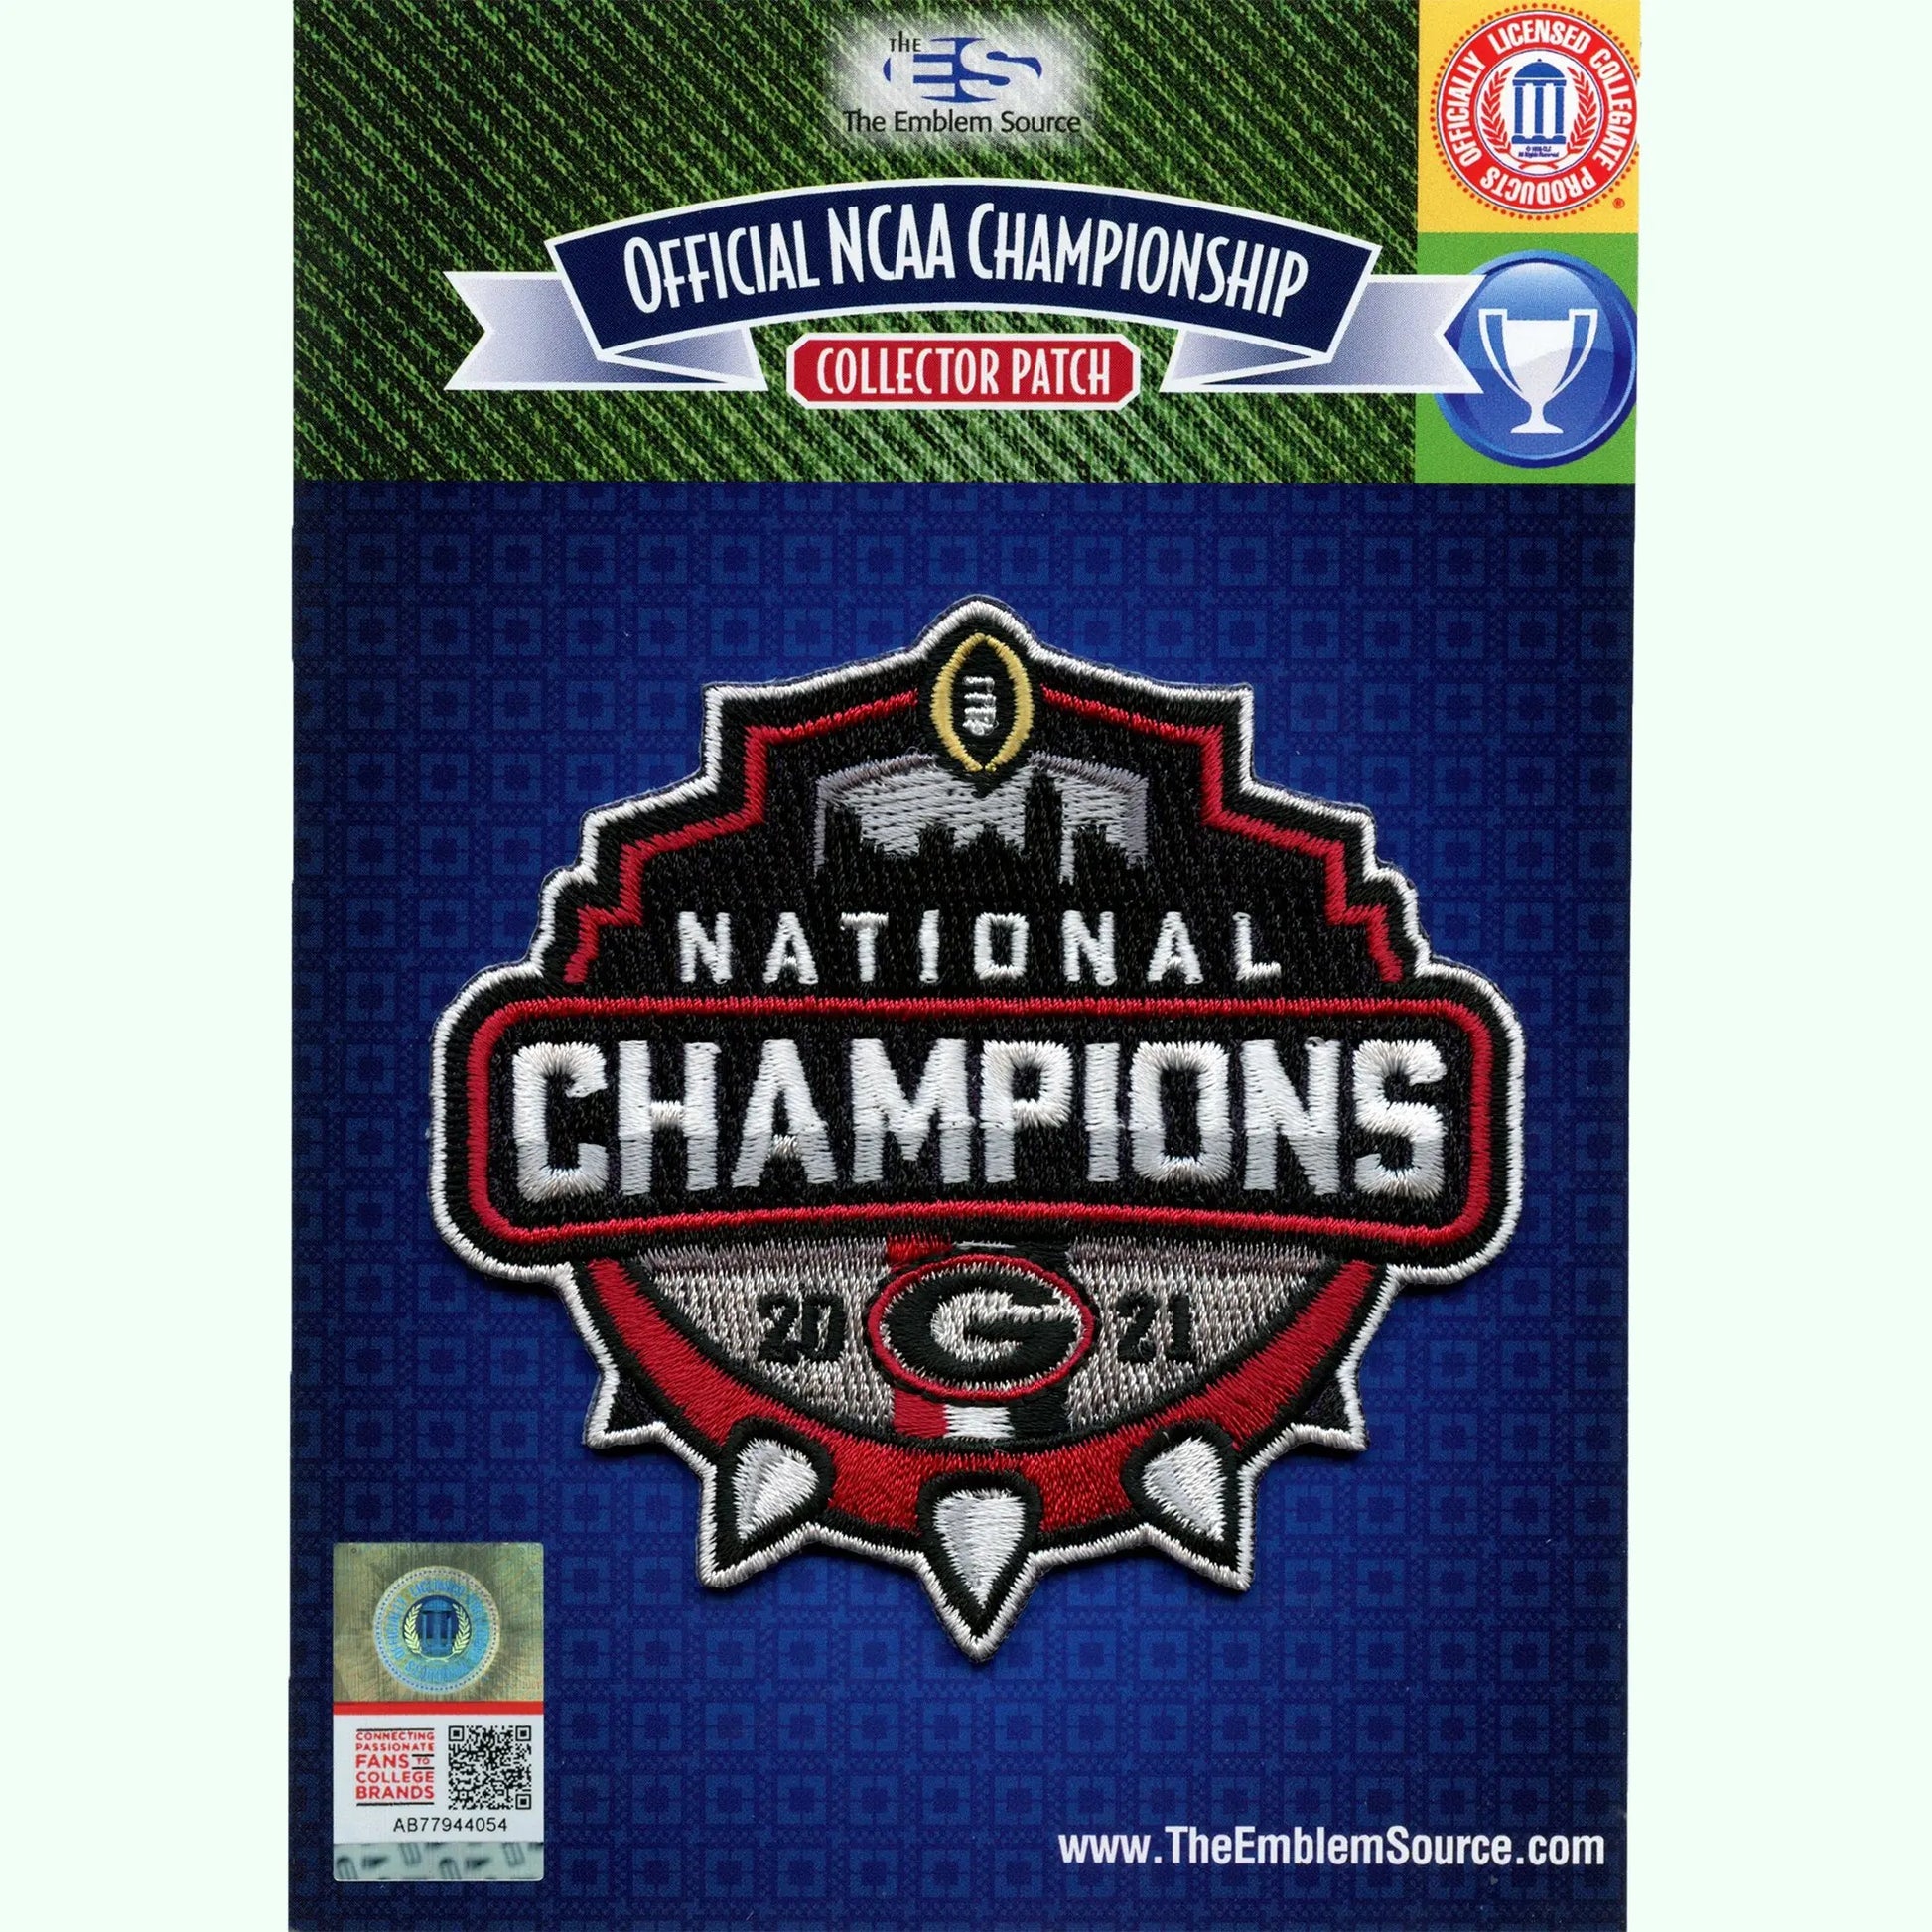 Georgia breaks down the 2021 National Champions logo